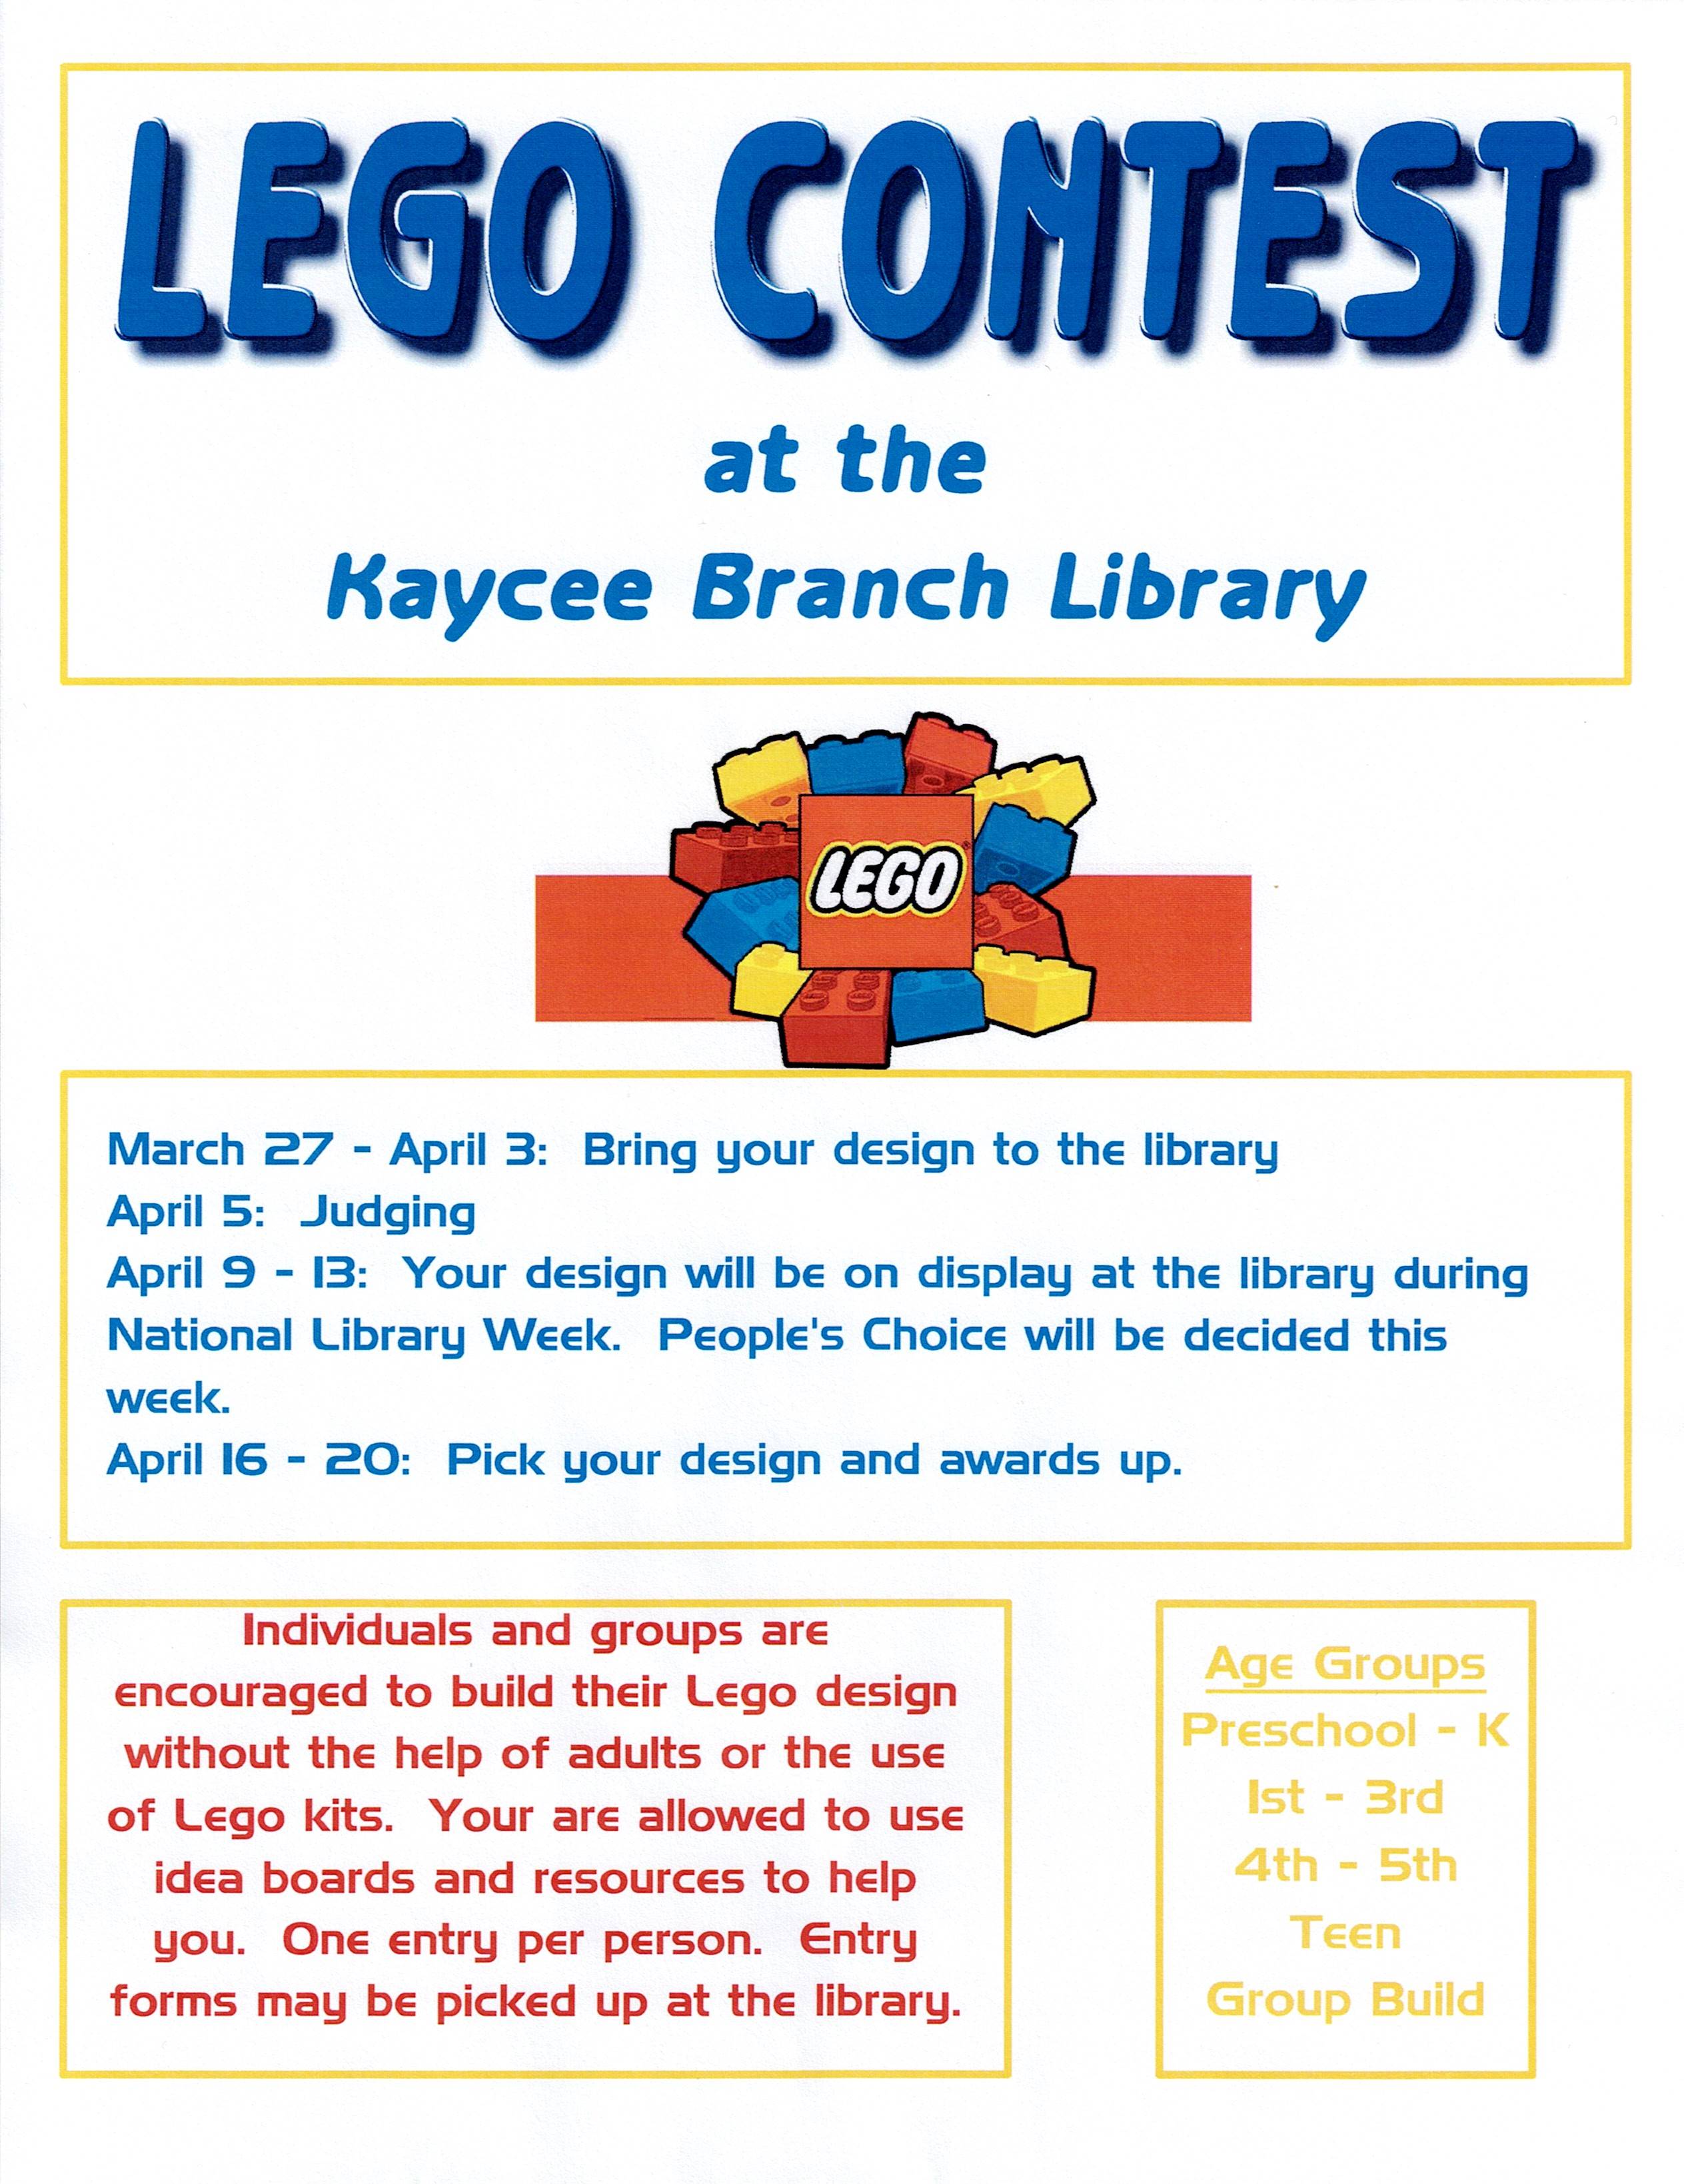 Lego Contest Image